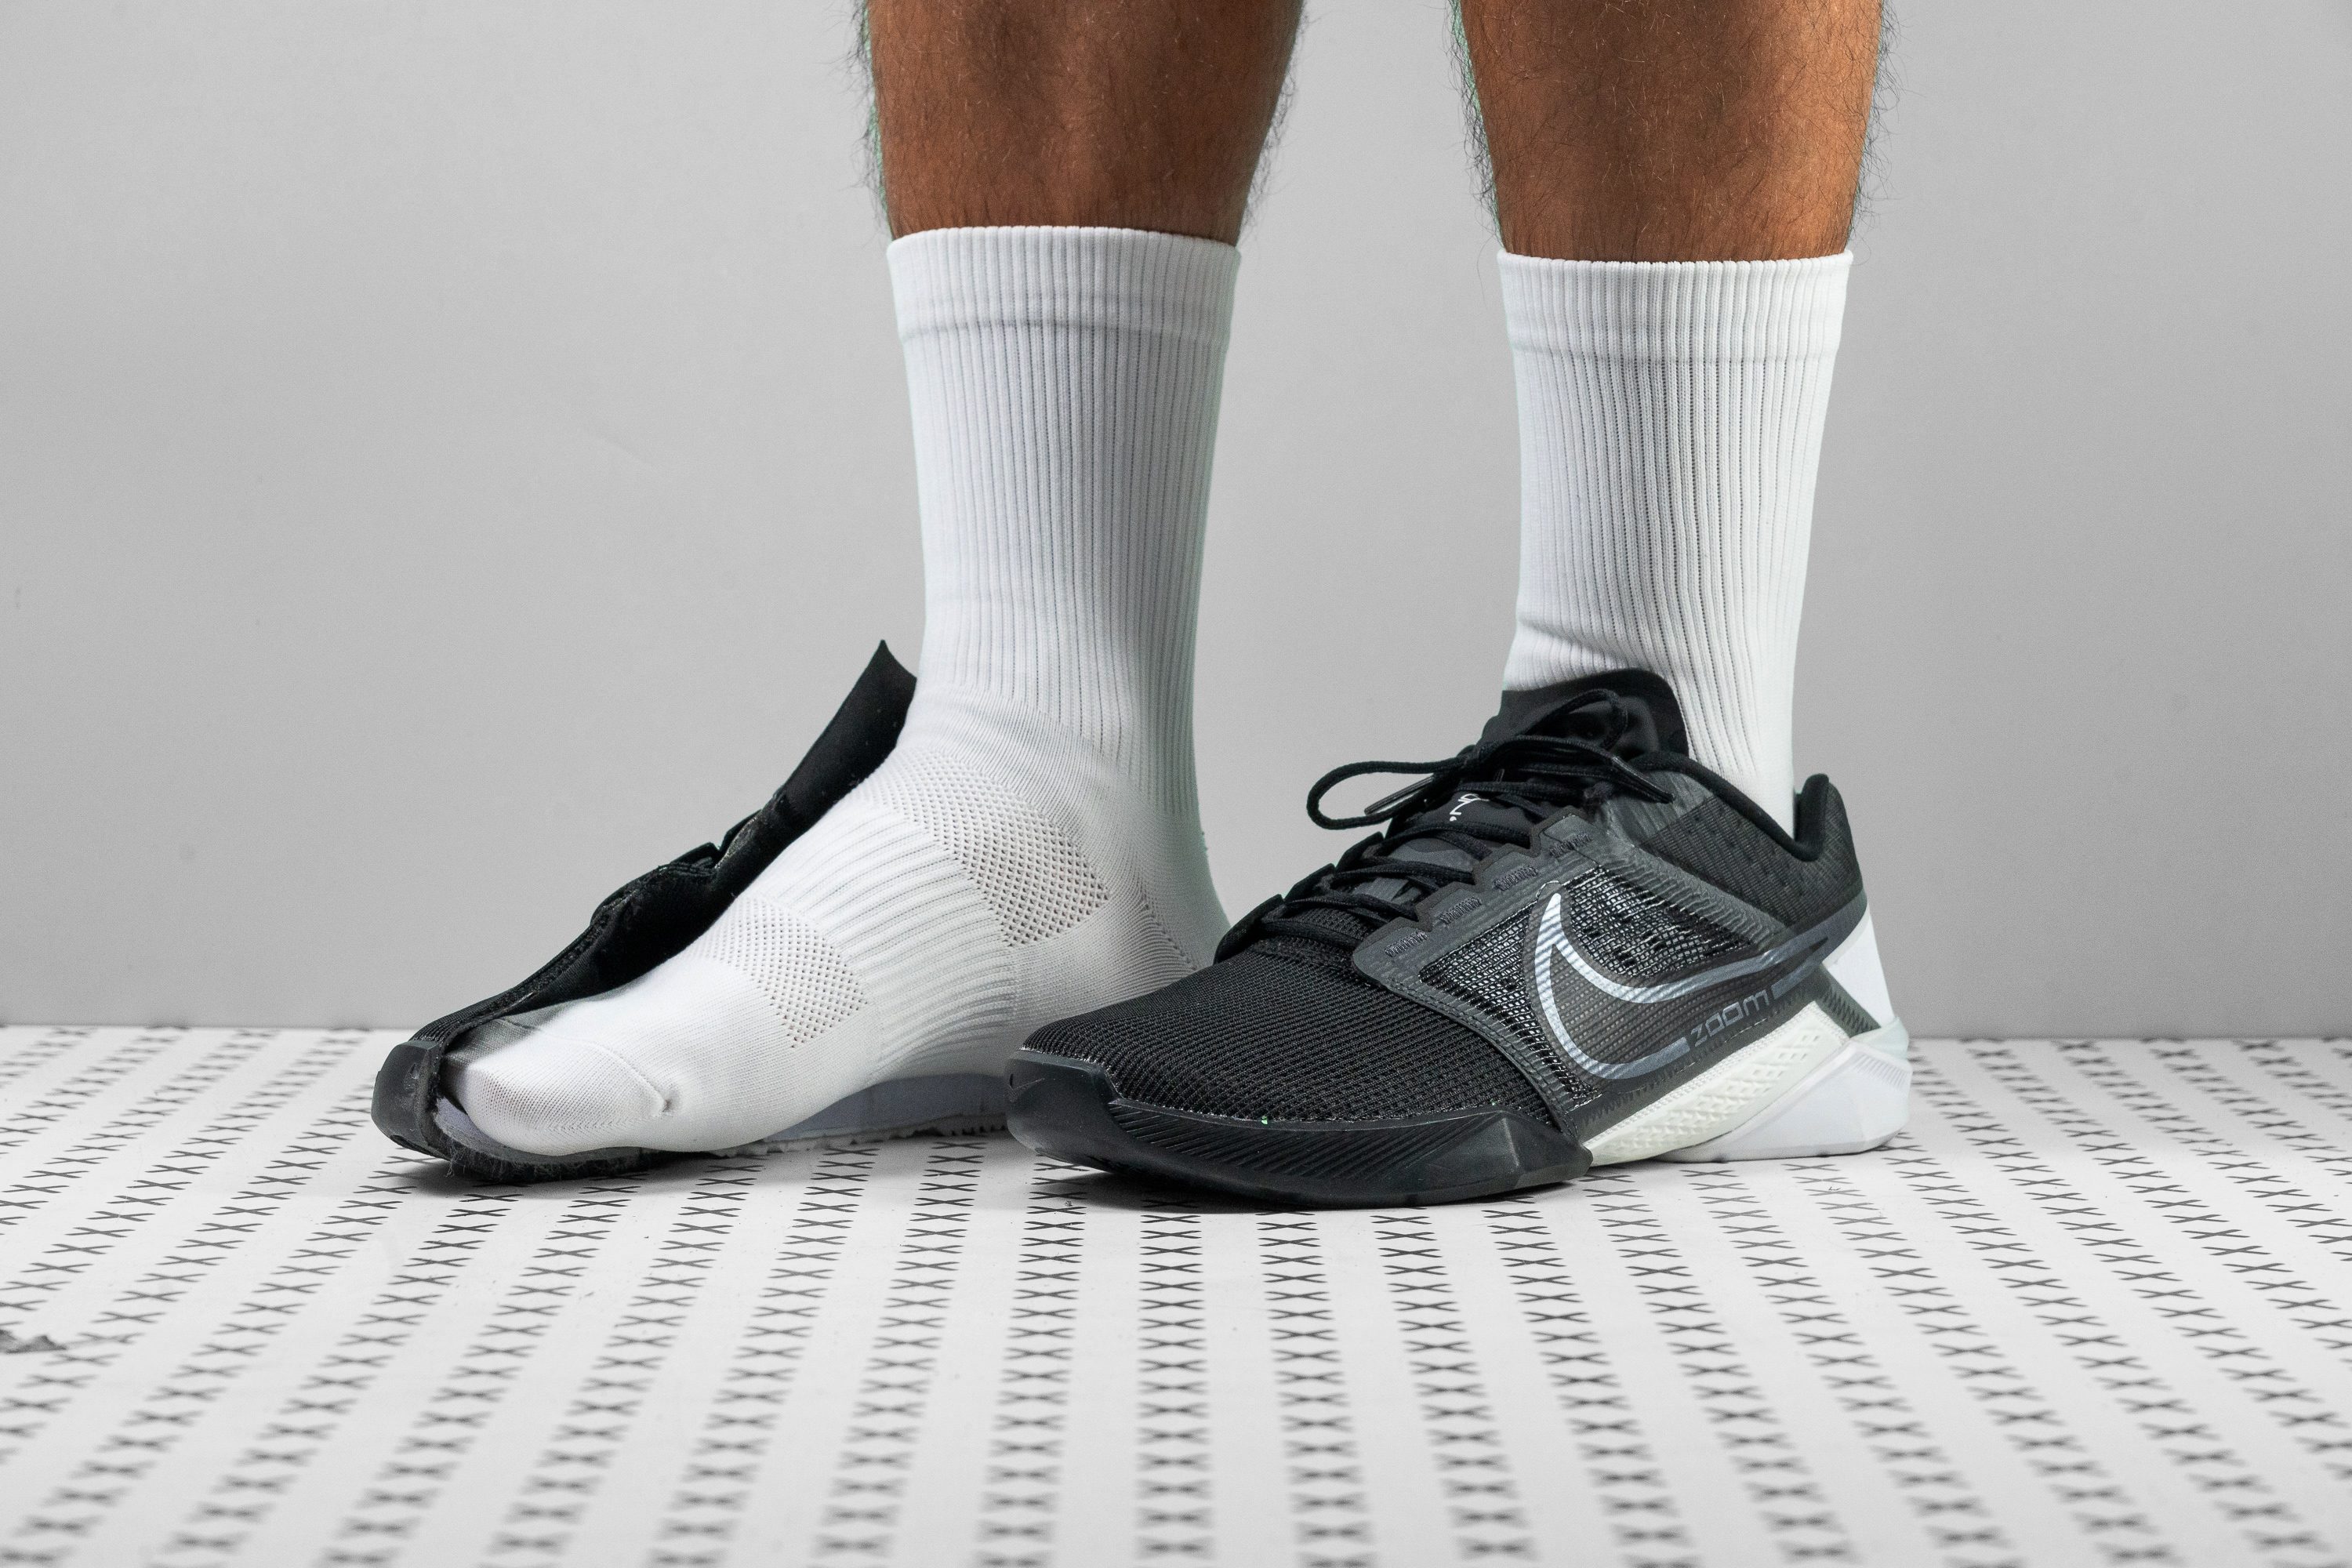 Nike Zoom Metcon Turbo 2 Men's Workout Shoes.